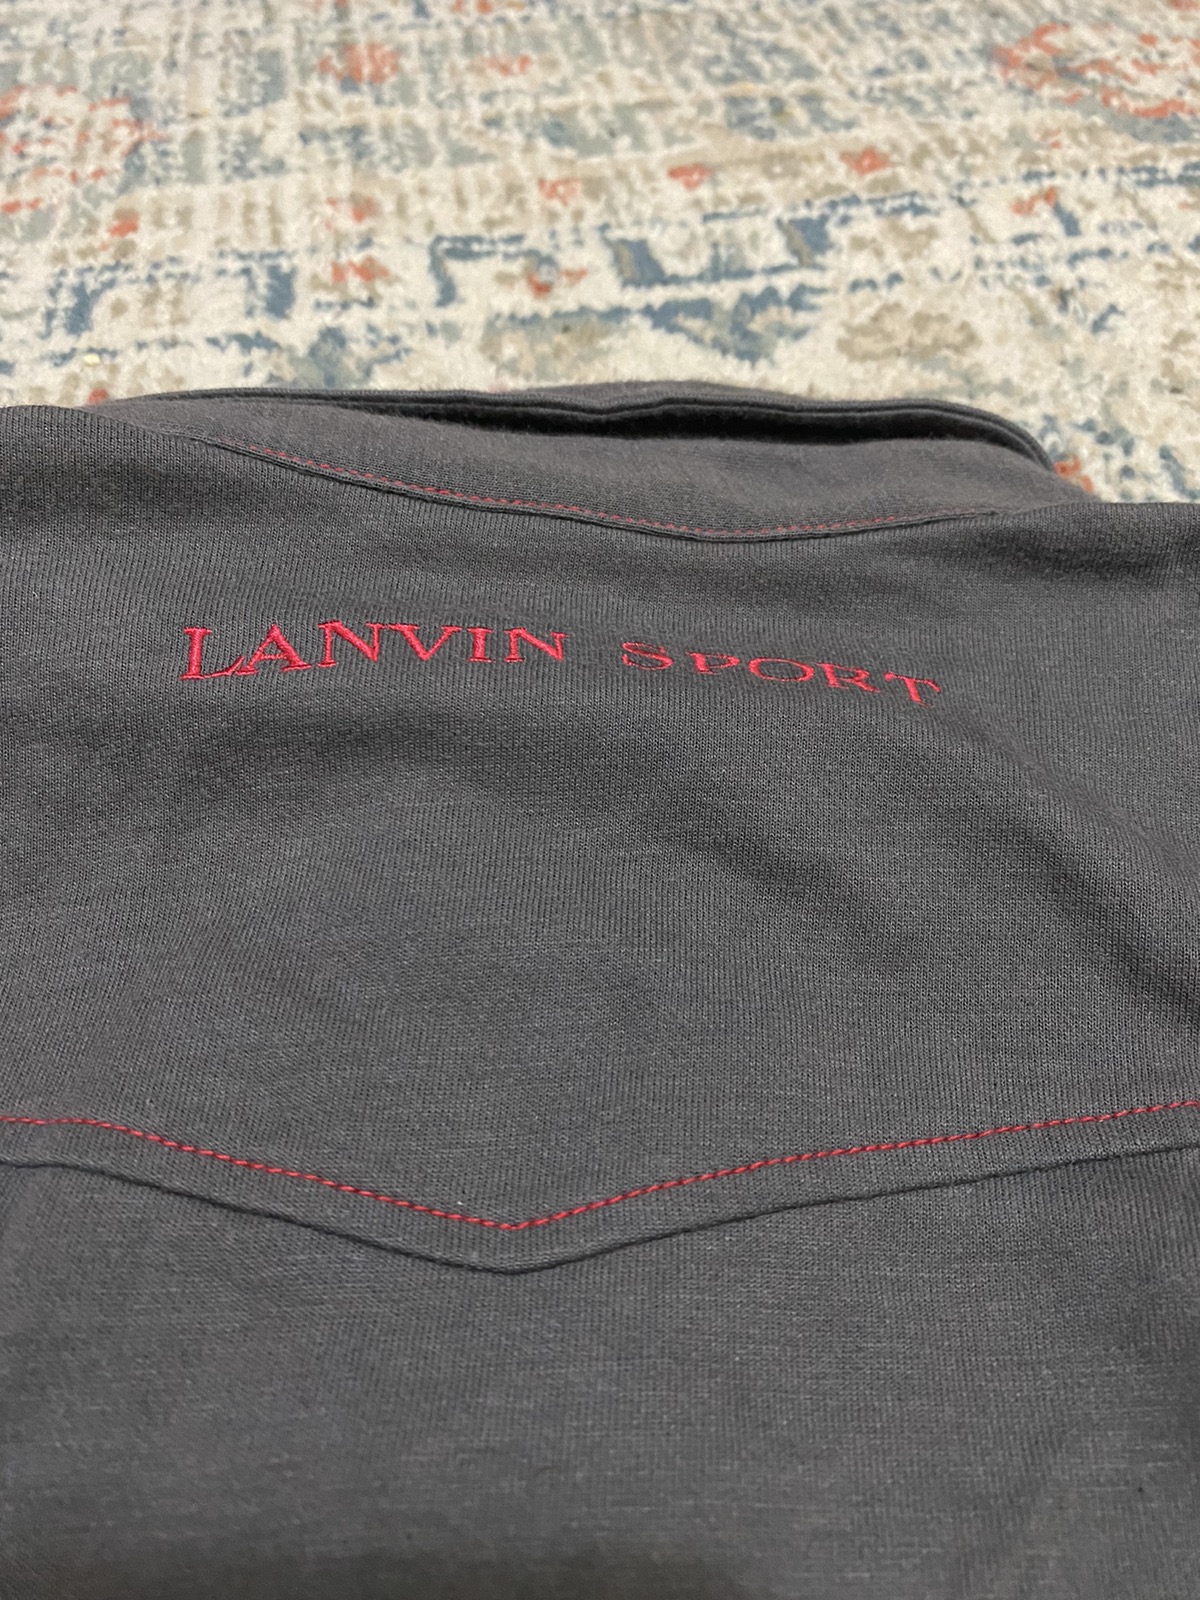 Vintage Lanvin Sport Long Sleeve Size 38 - 5